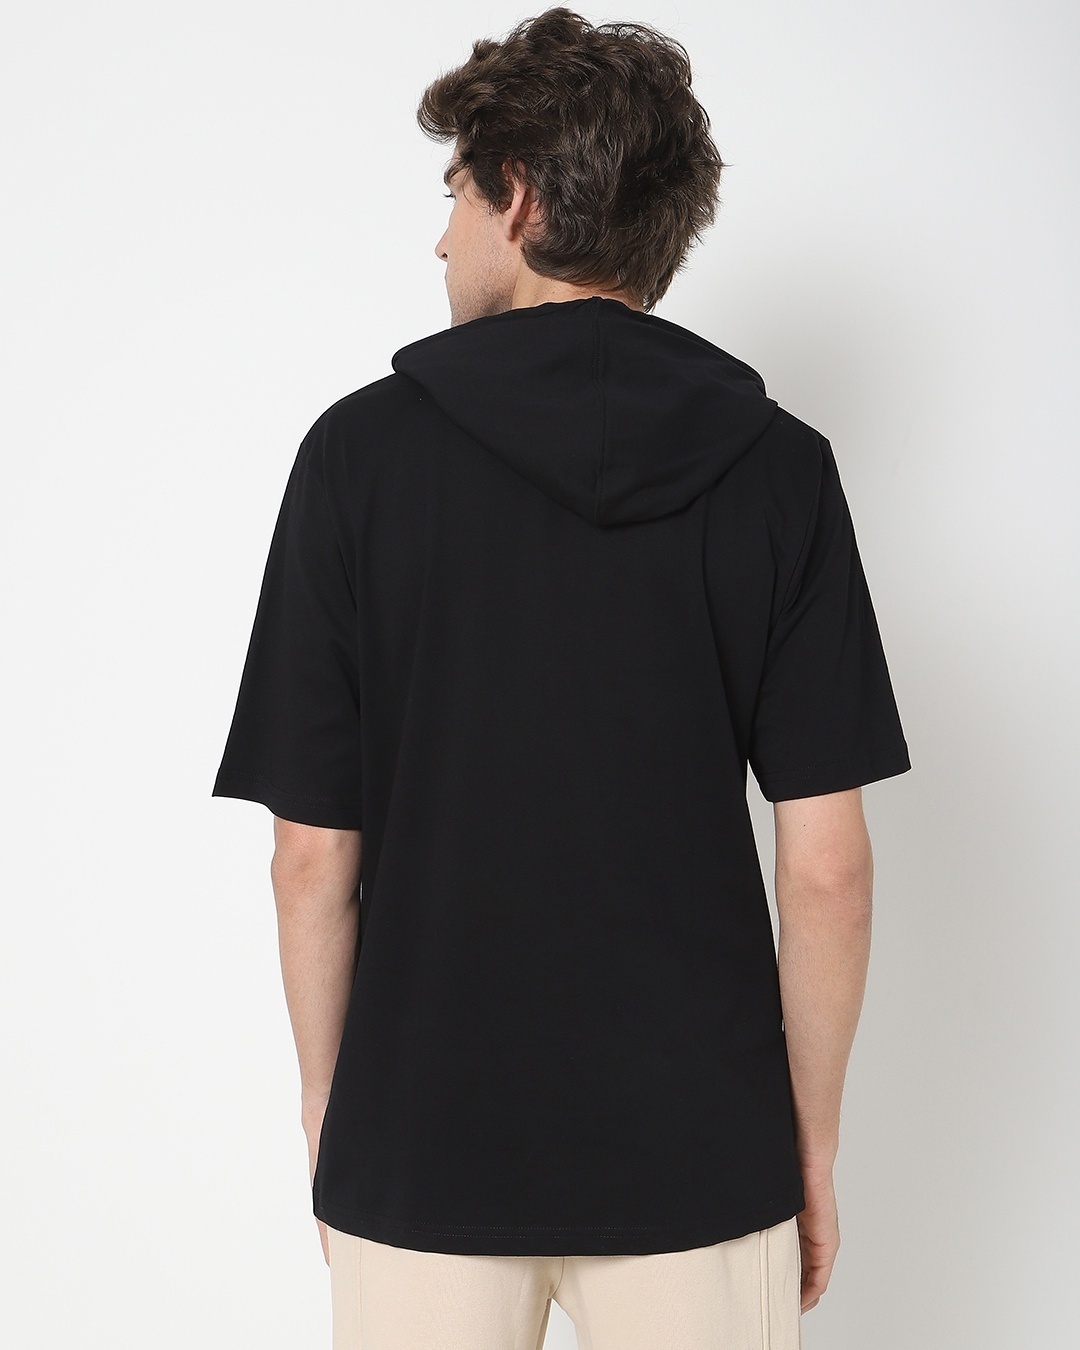 Shop Black Half Sleeve Hoodie T-shirt-Design